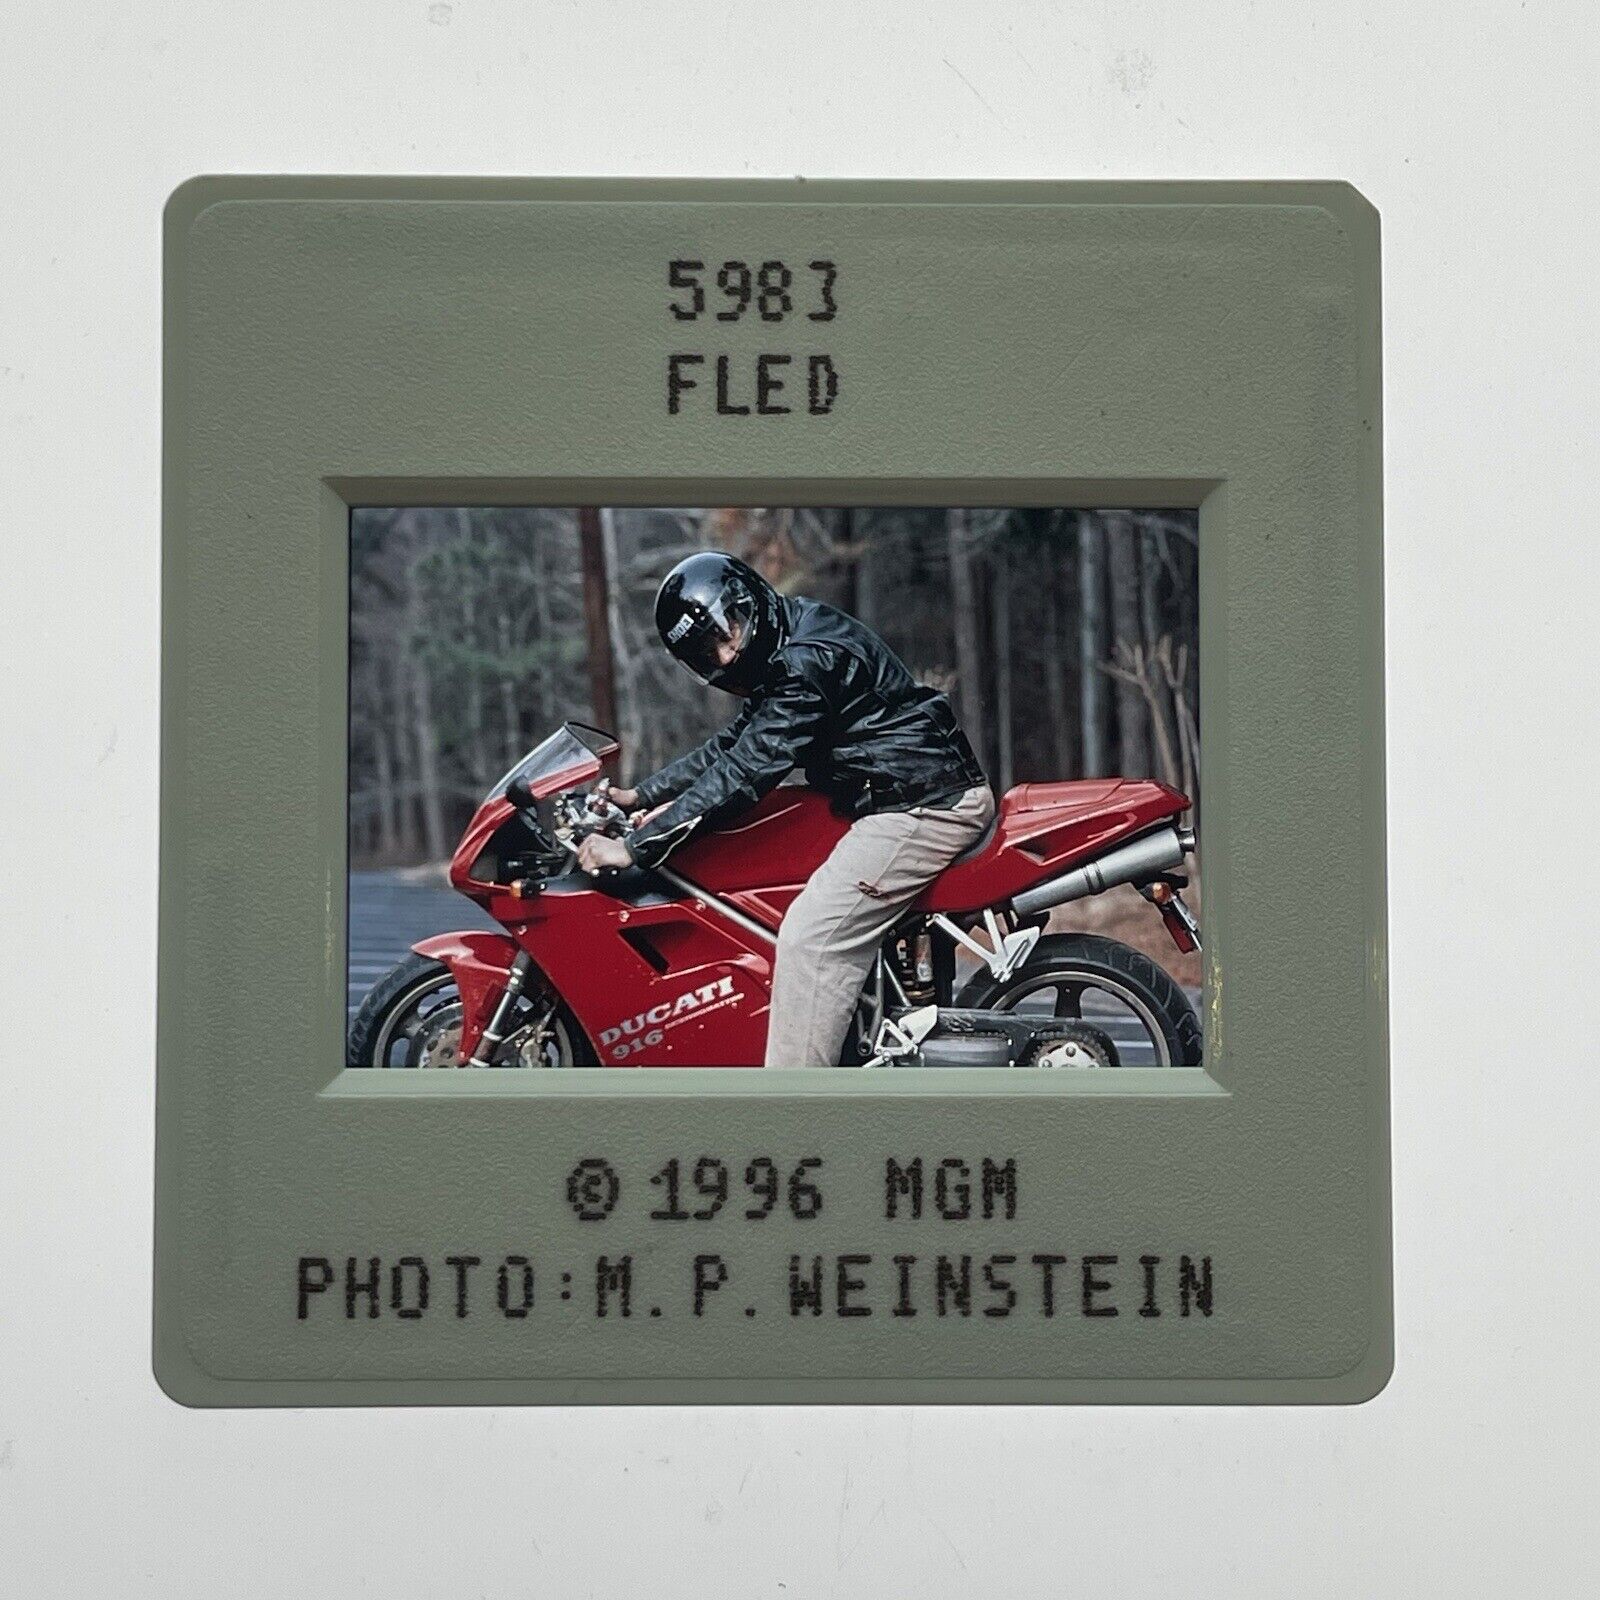 Laurence Fishburne in Fled Ducati Motorcycle Film Actor S36212 SD15 35mm Slide￼